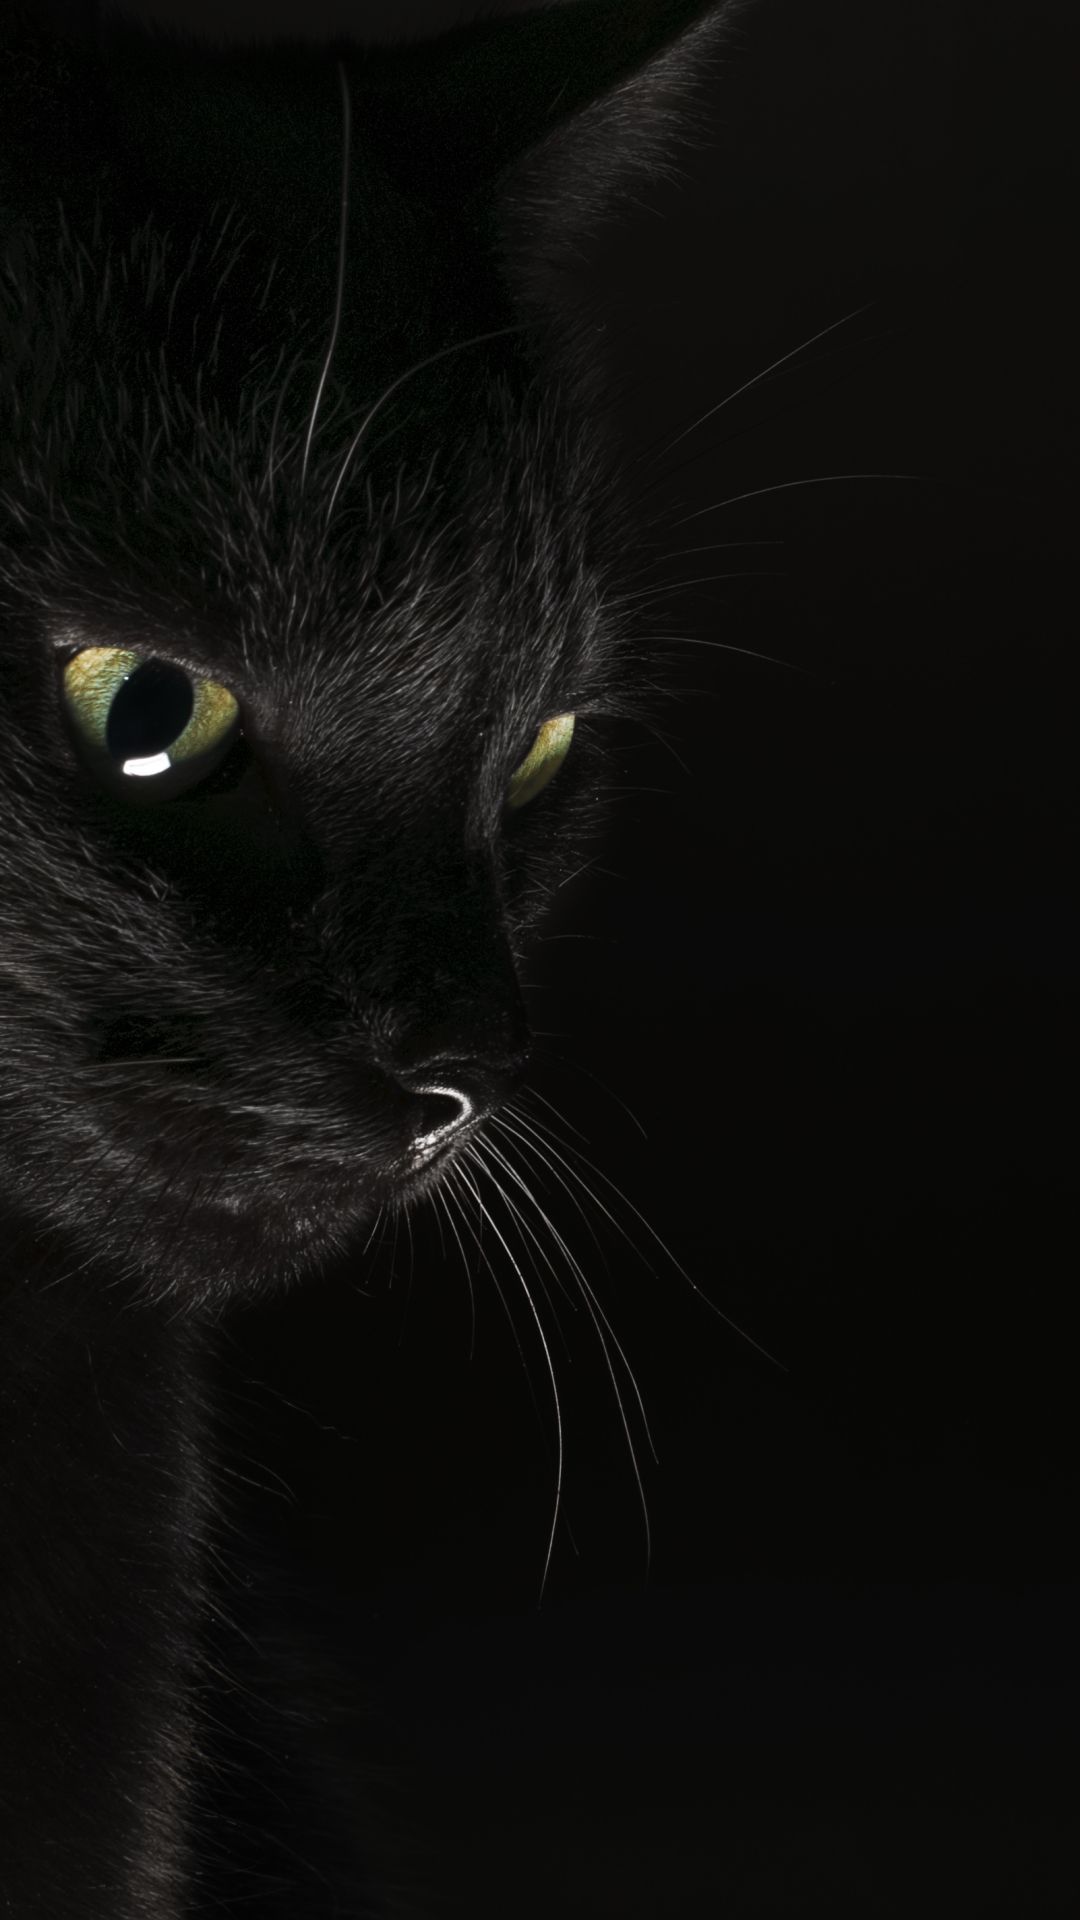 Black cat wallpaper download for desktop wallpaper